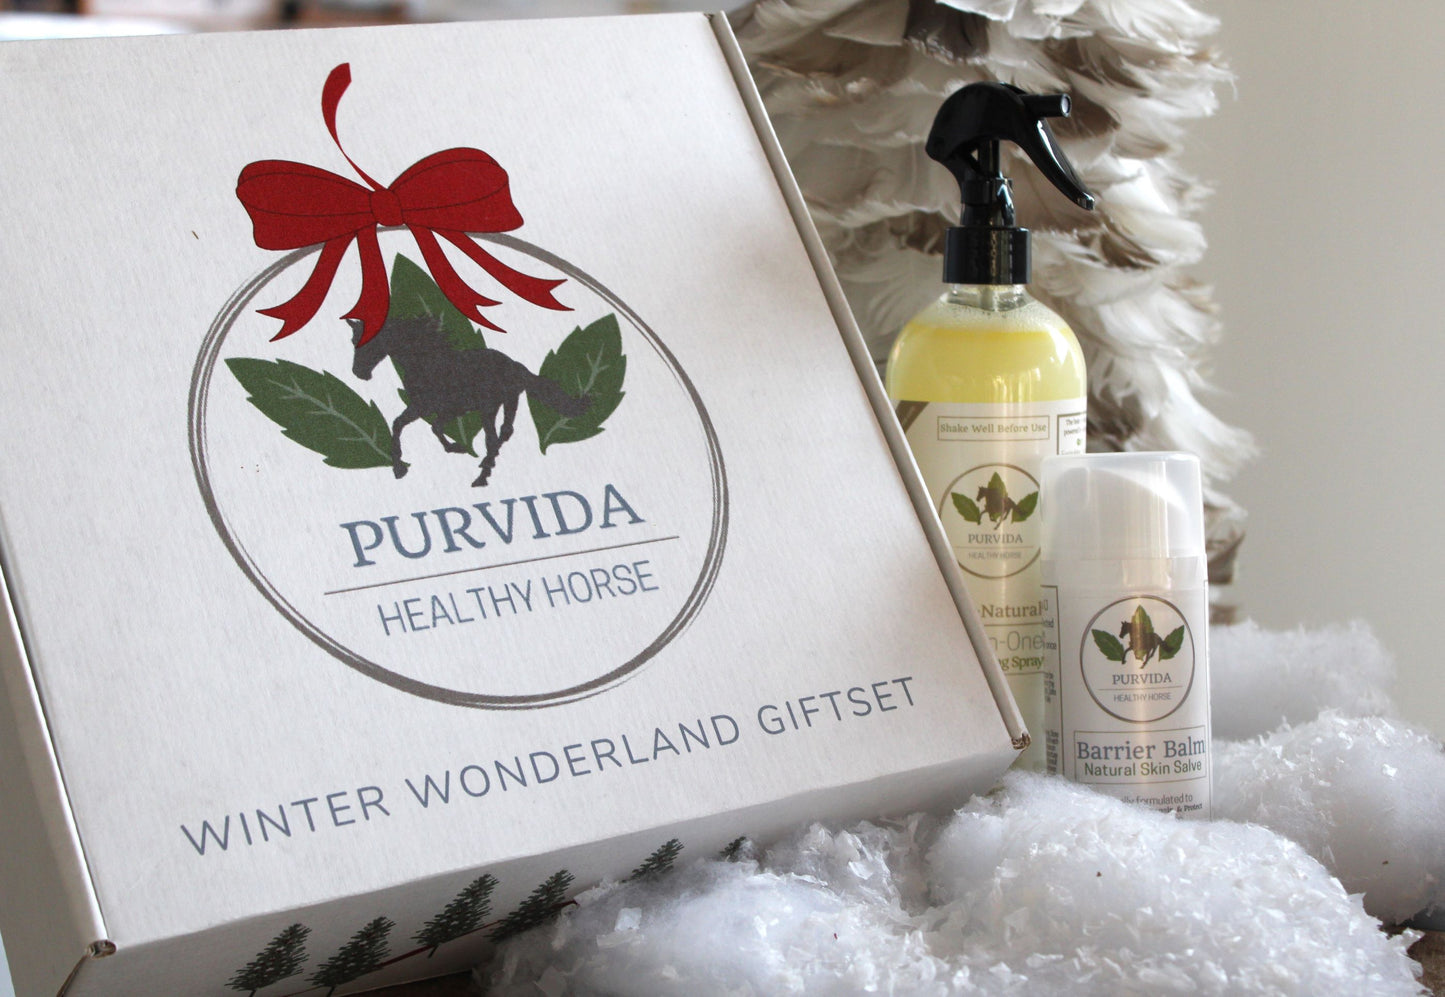 The Winter Wonderland Giftset - Purvida Healthy Horse